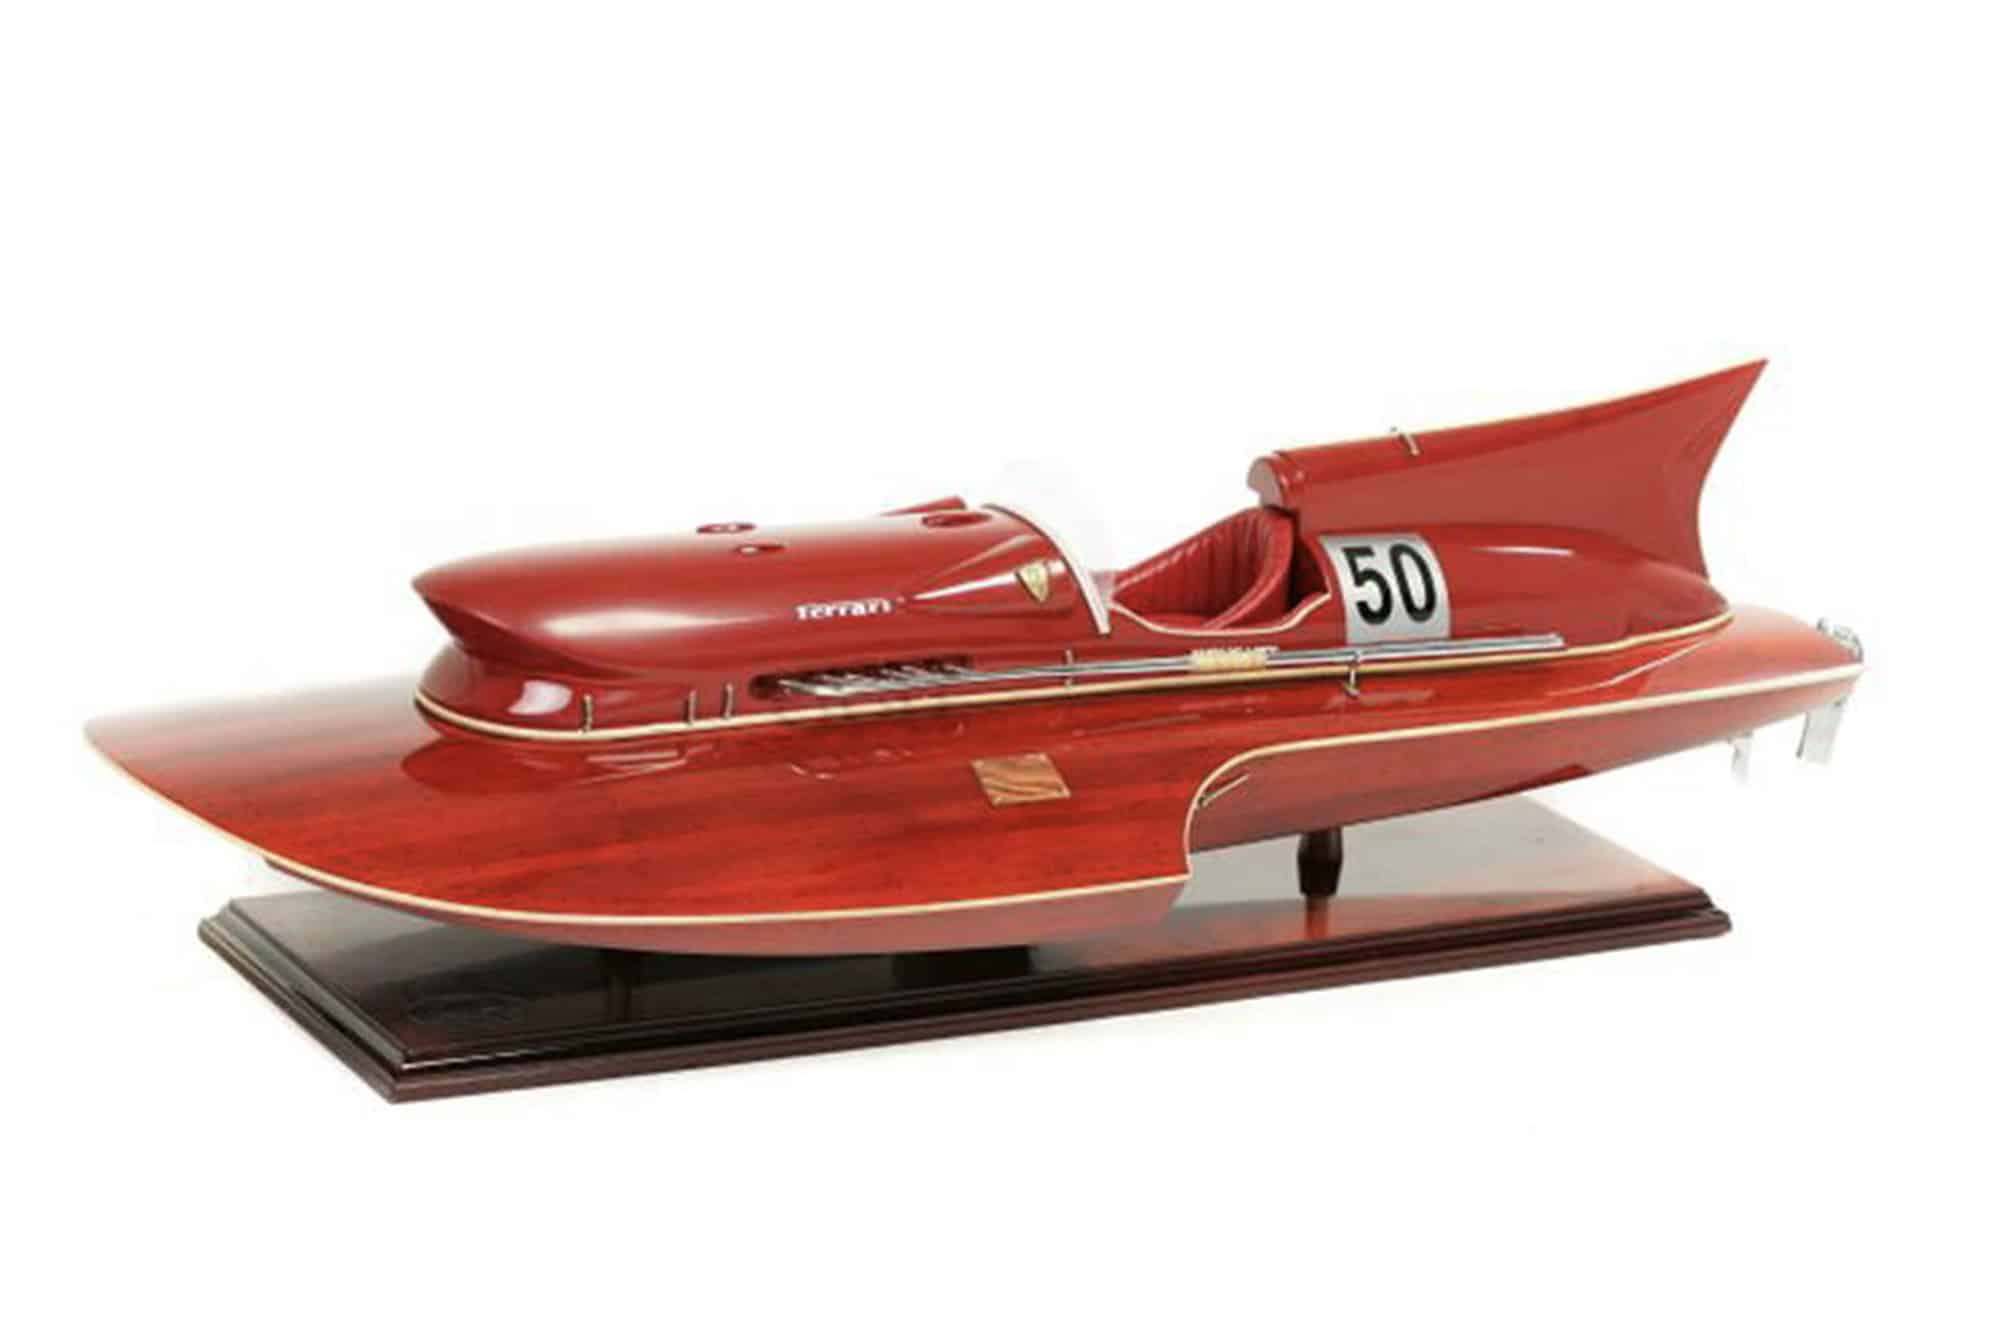 Ferrari hydroplane model